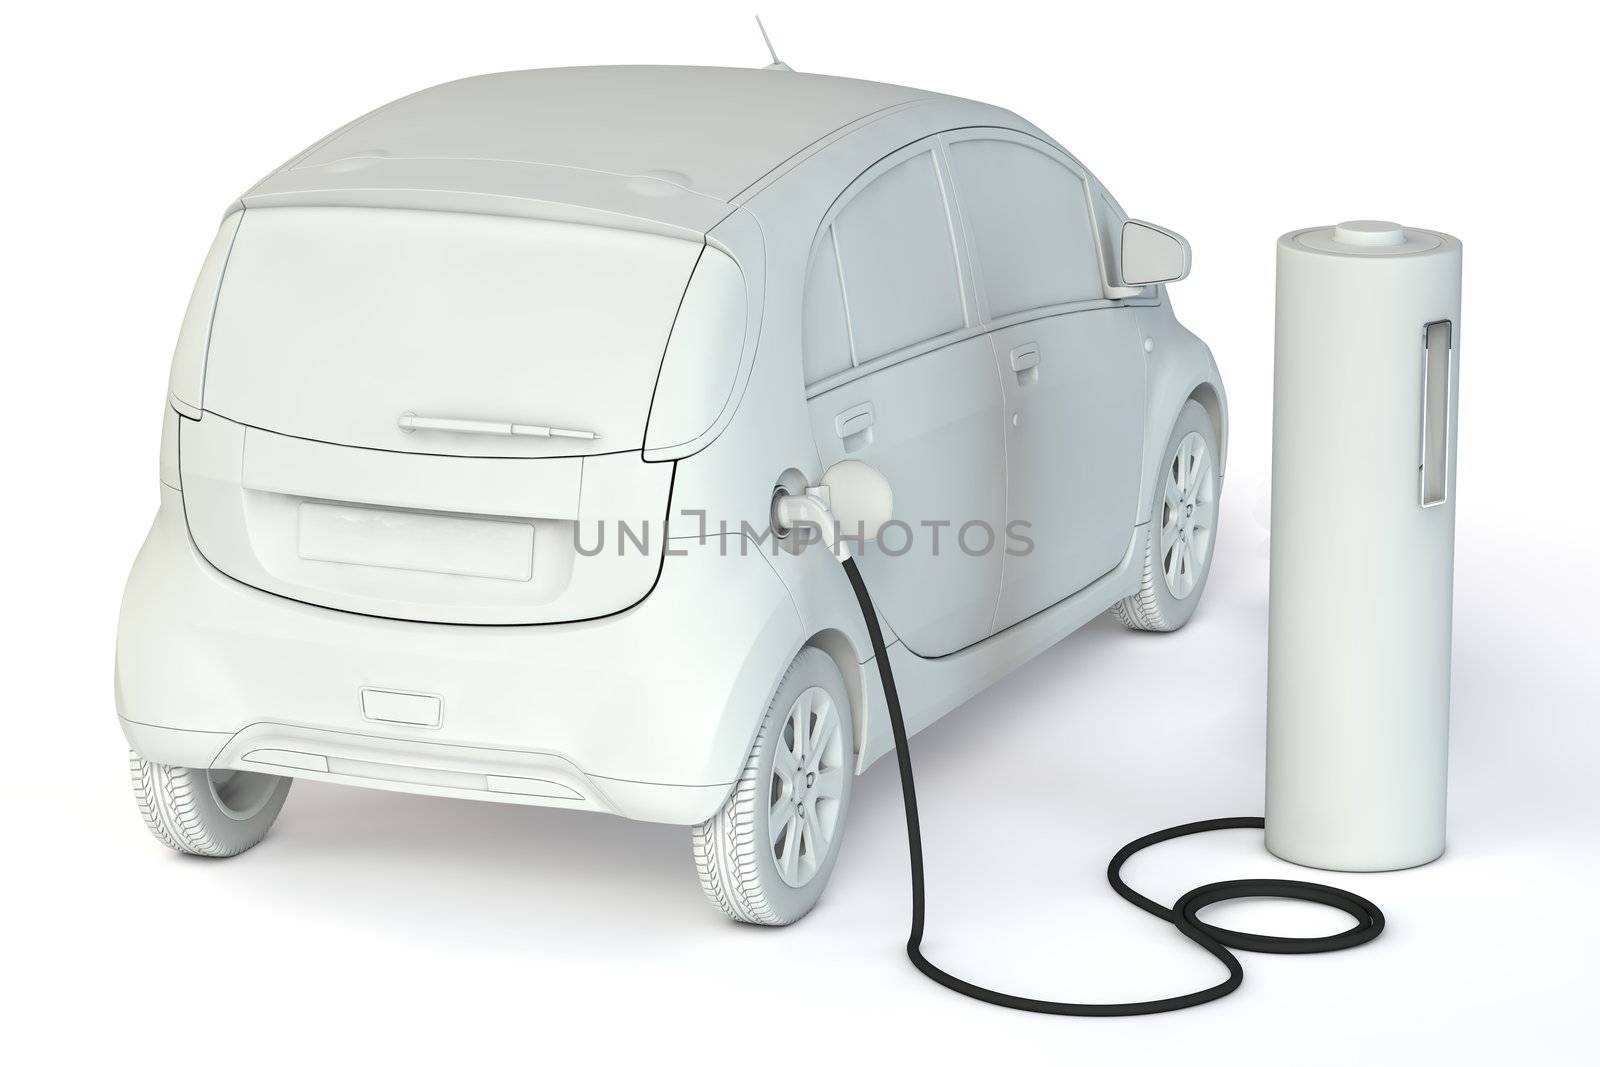 alternative energy template - a grey battery as a fuel pump fuels an E-Car